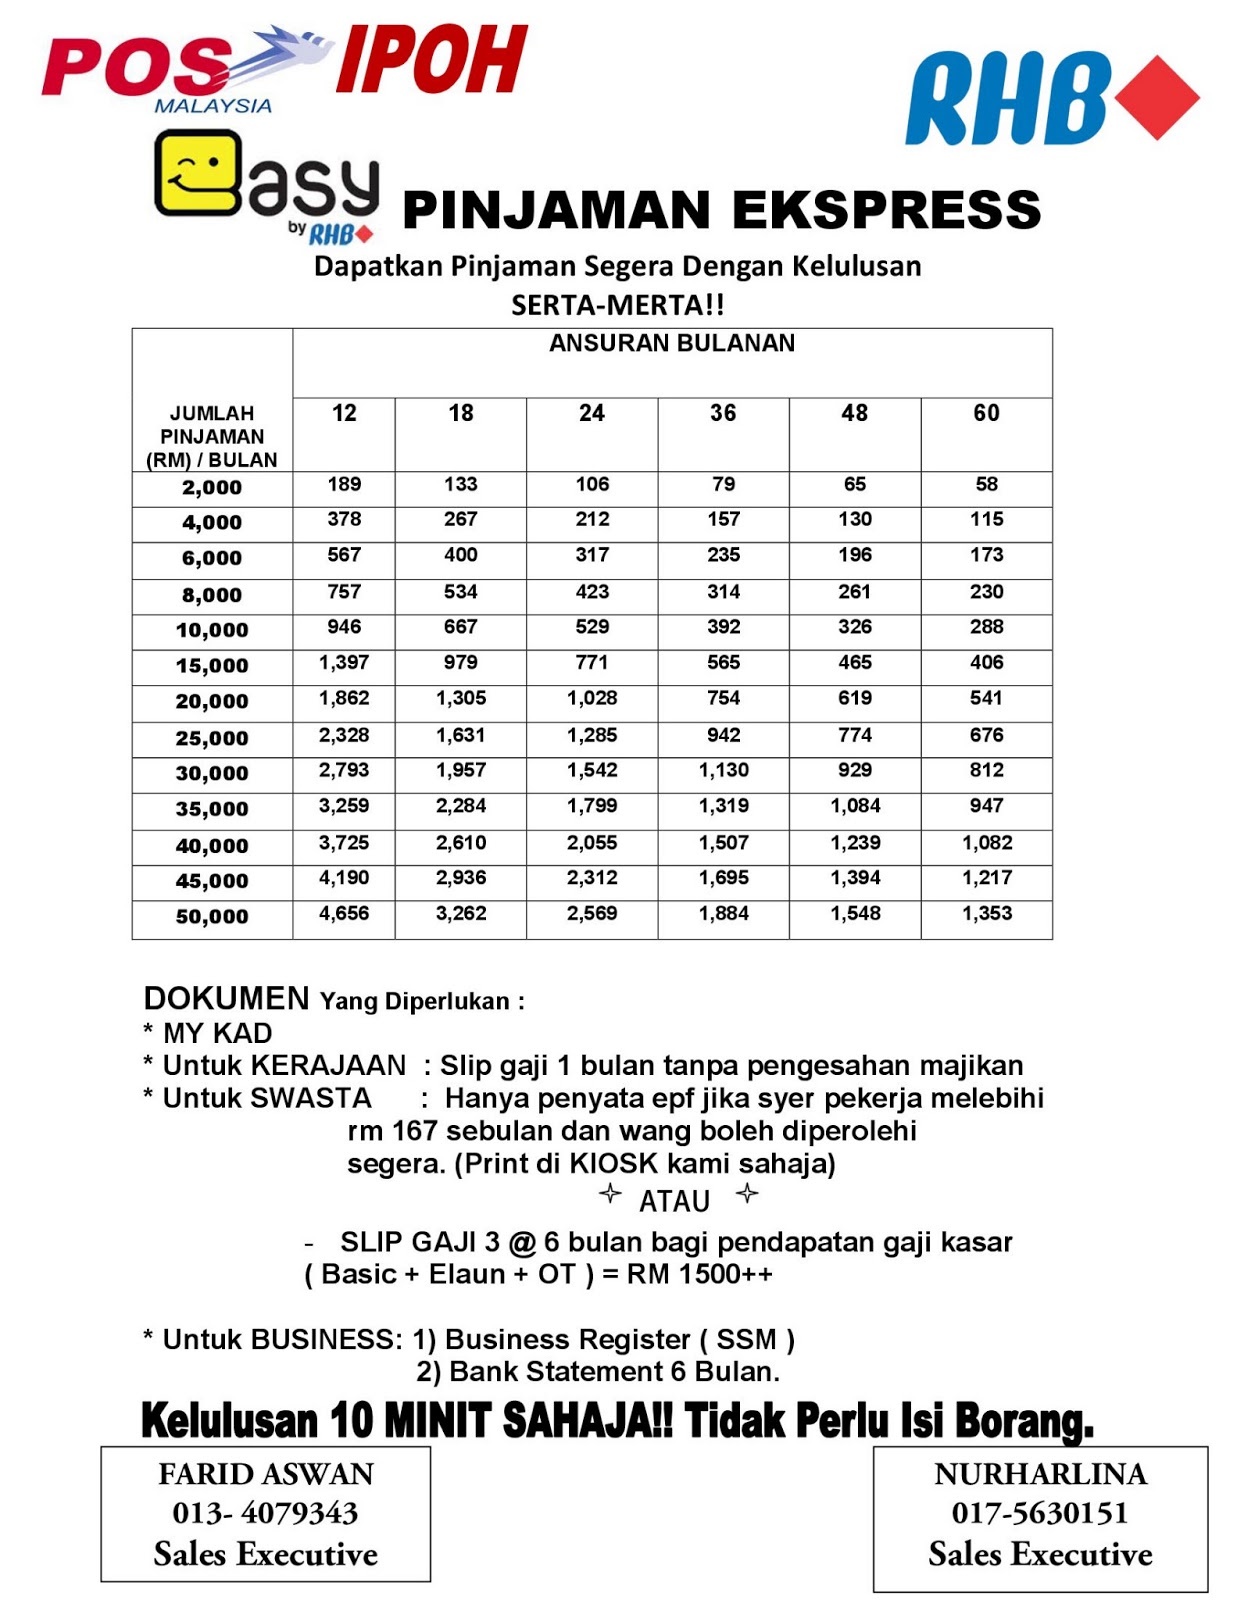 Loan Express RHB Pinjaman Ekspres EASY RHB IPOH